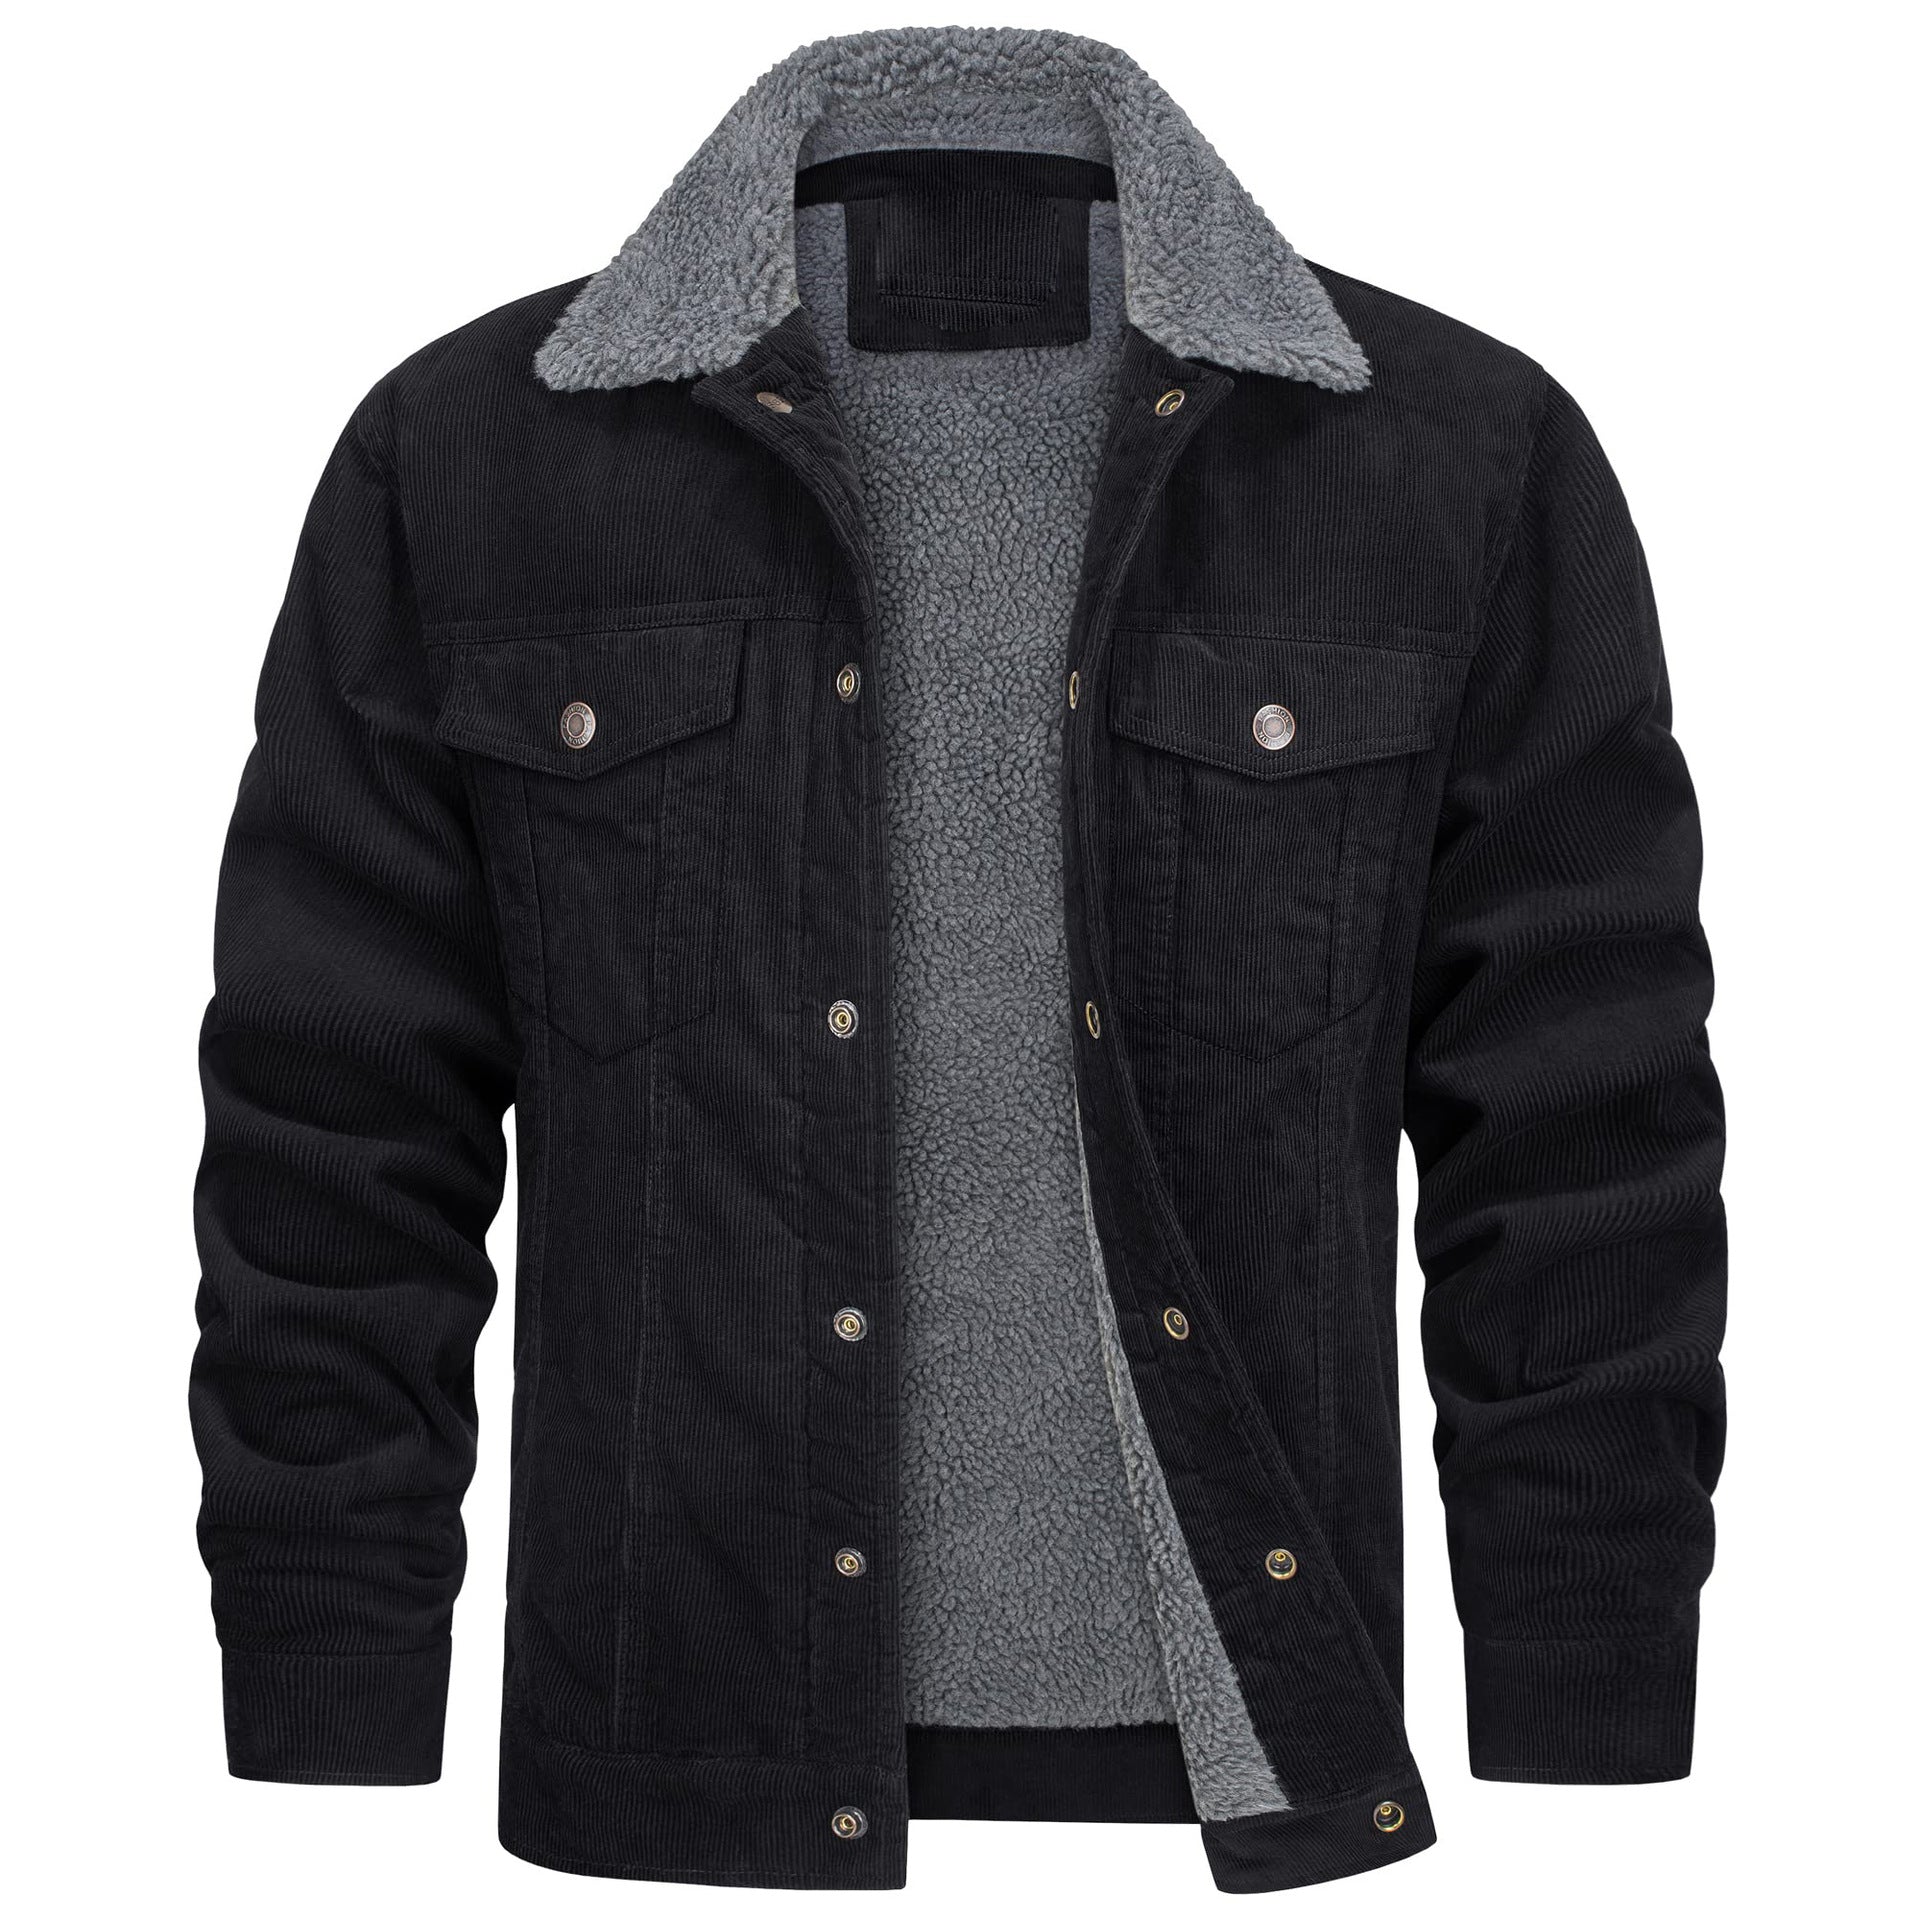 Casual Winter Long Sleeves Velvet Jacket Coats for Men-Coats & Jackets-Black-2-S-Free Shipping at meselling99